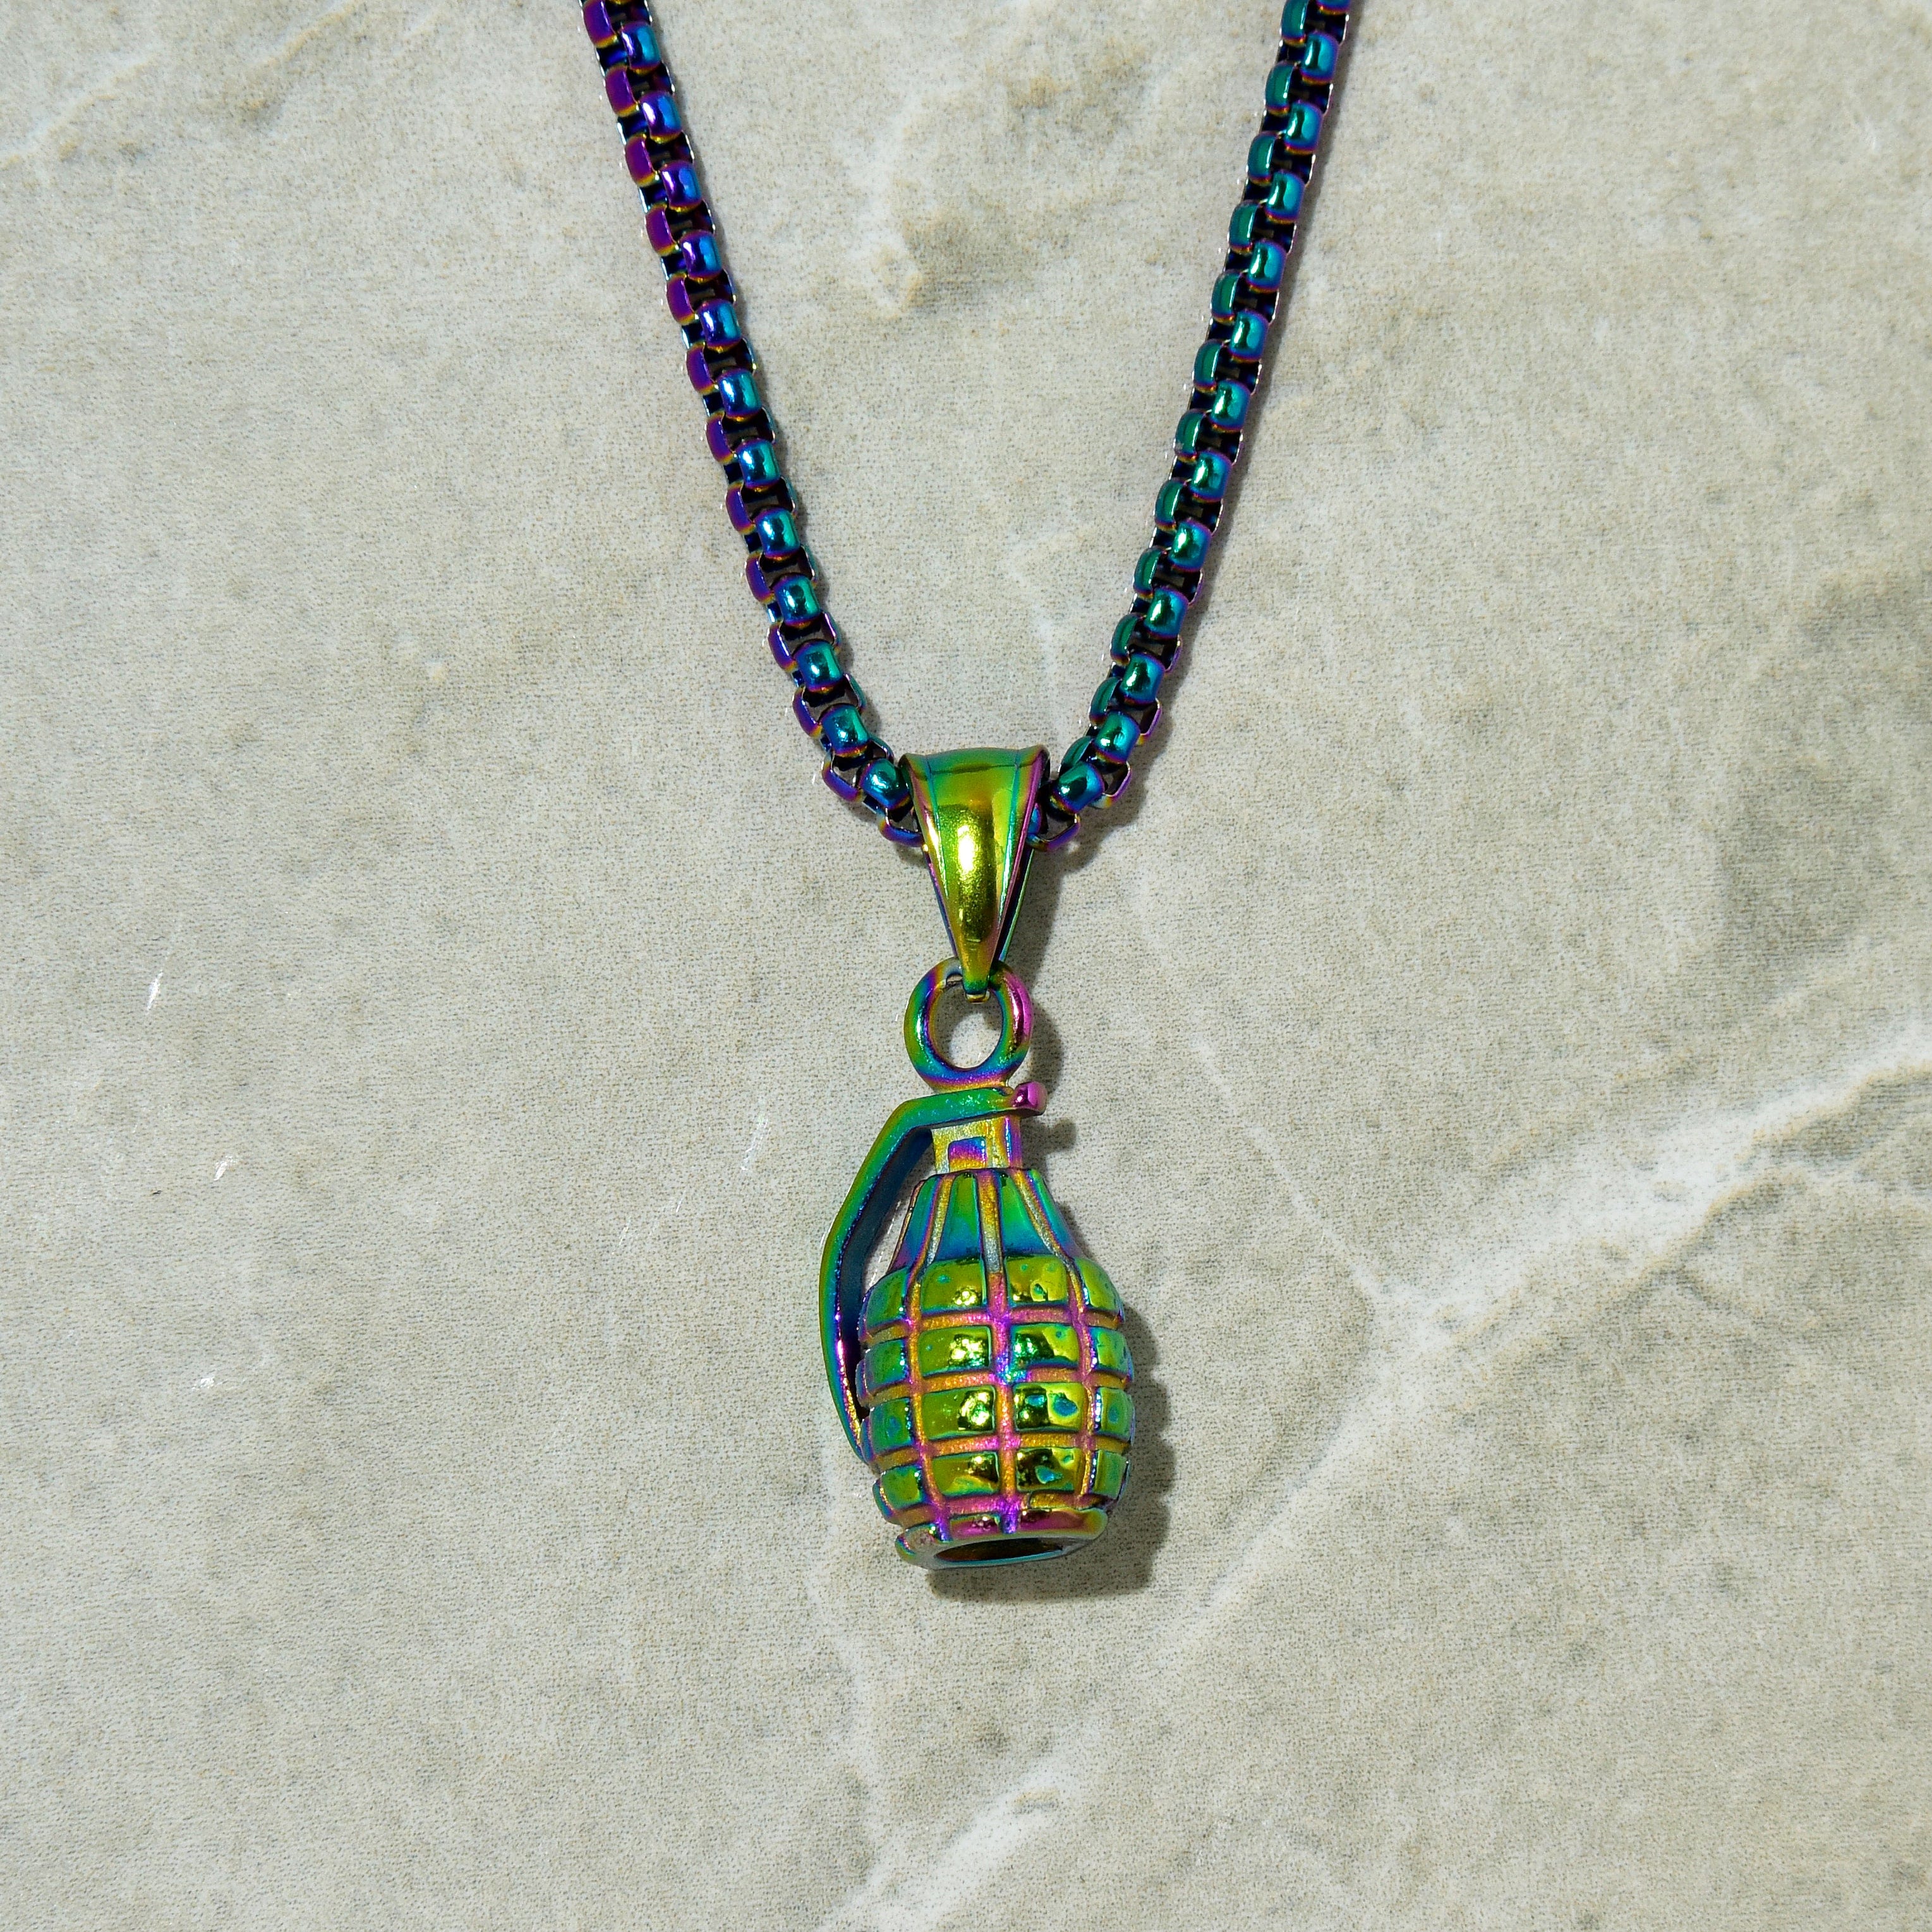 Kalifano Steel Hearts Jewelry Aurora Borealis Grenade Steel Hearts Necklace SHN501-AB